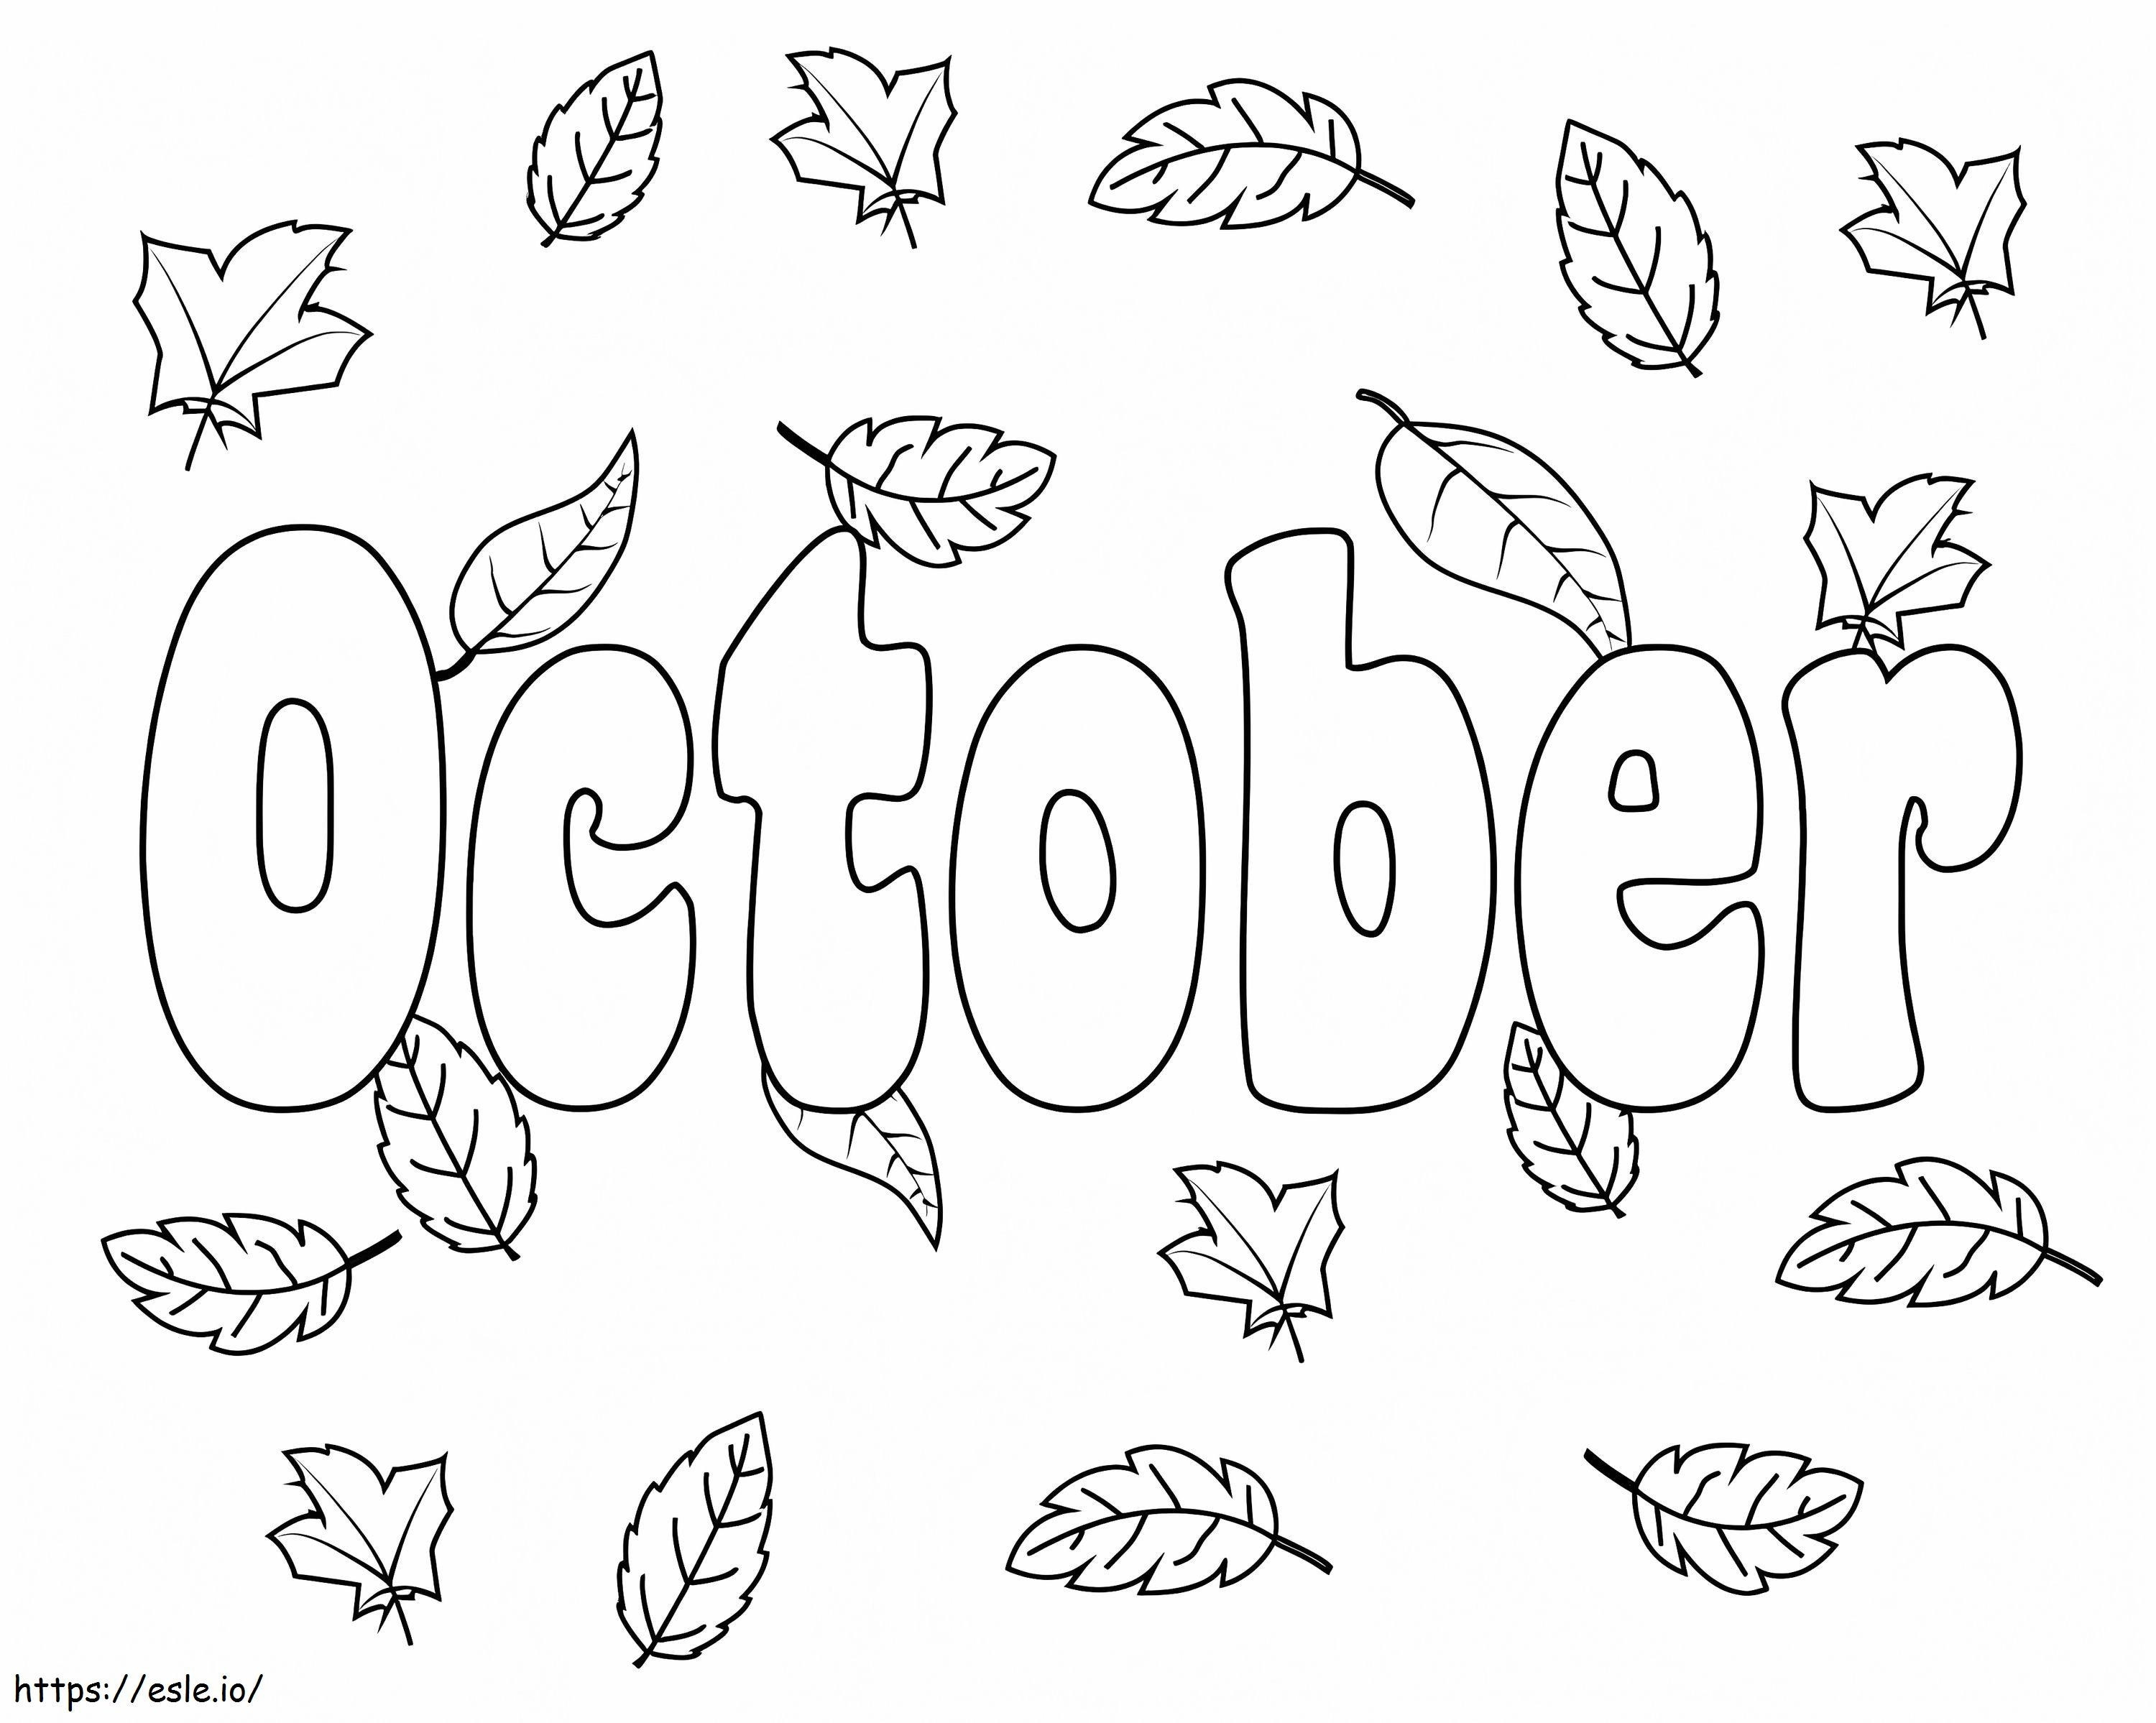 1 octombrie de colorat